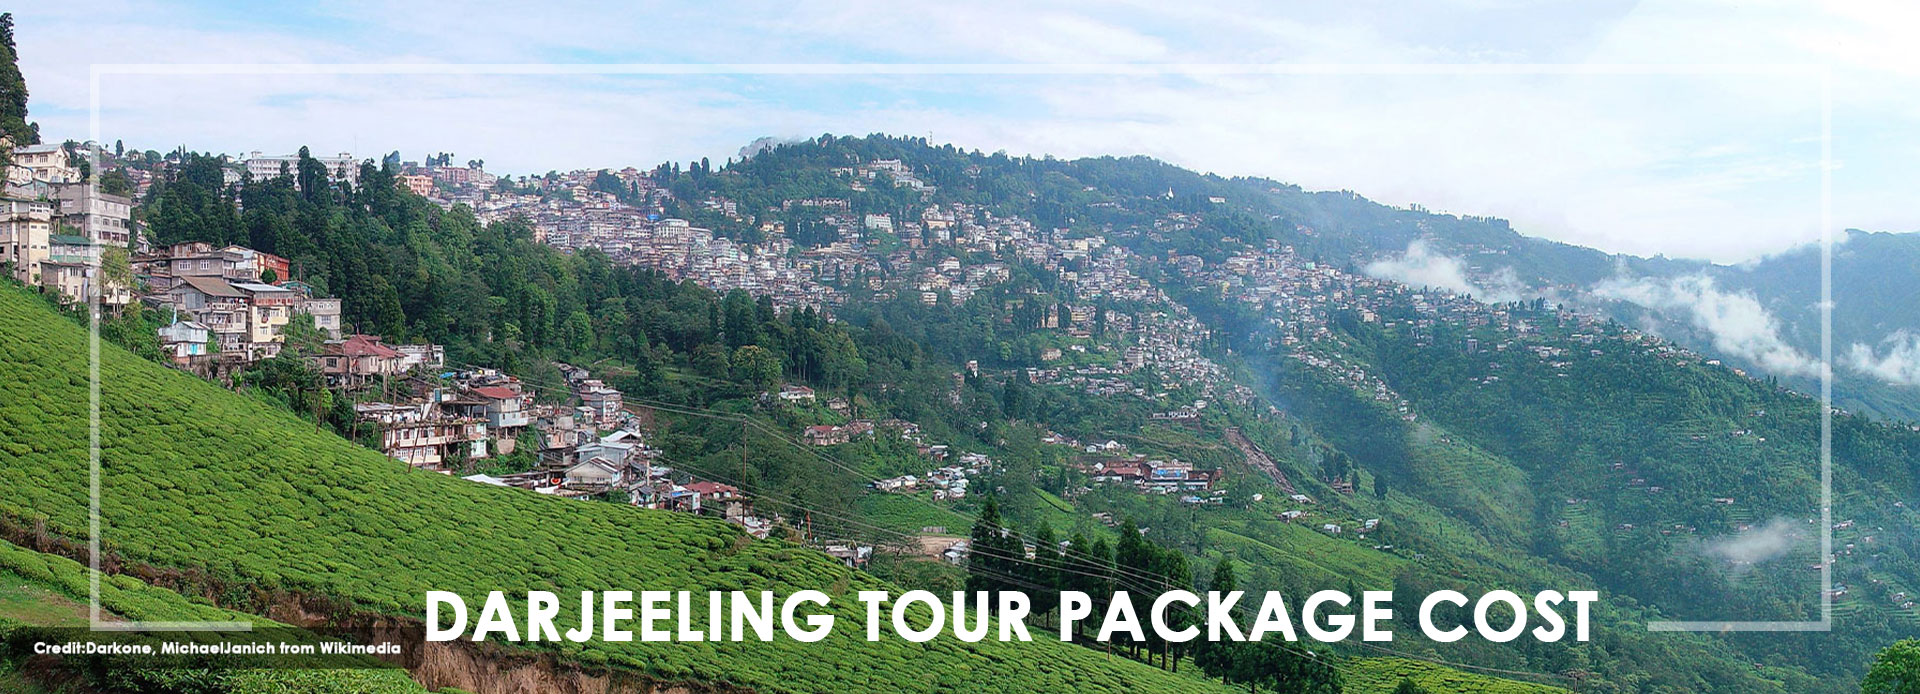  Darjeeling Tour Package Cost - Dream Destination